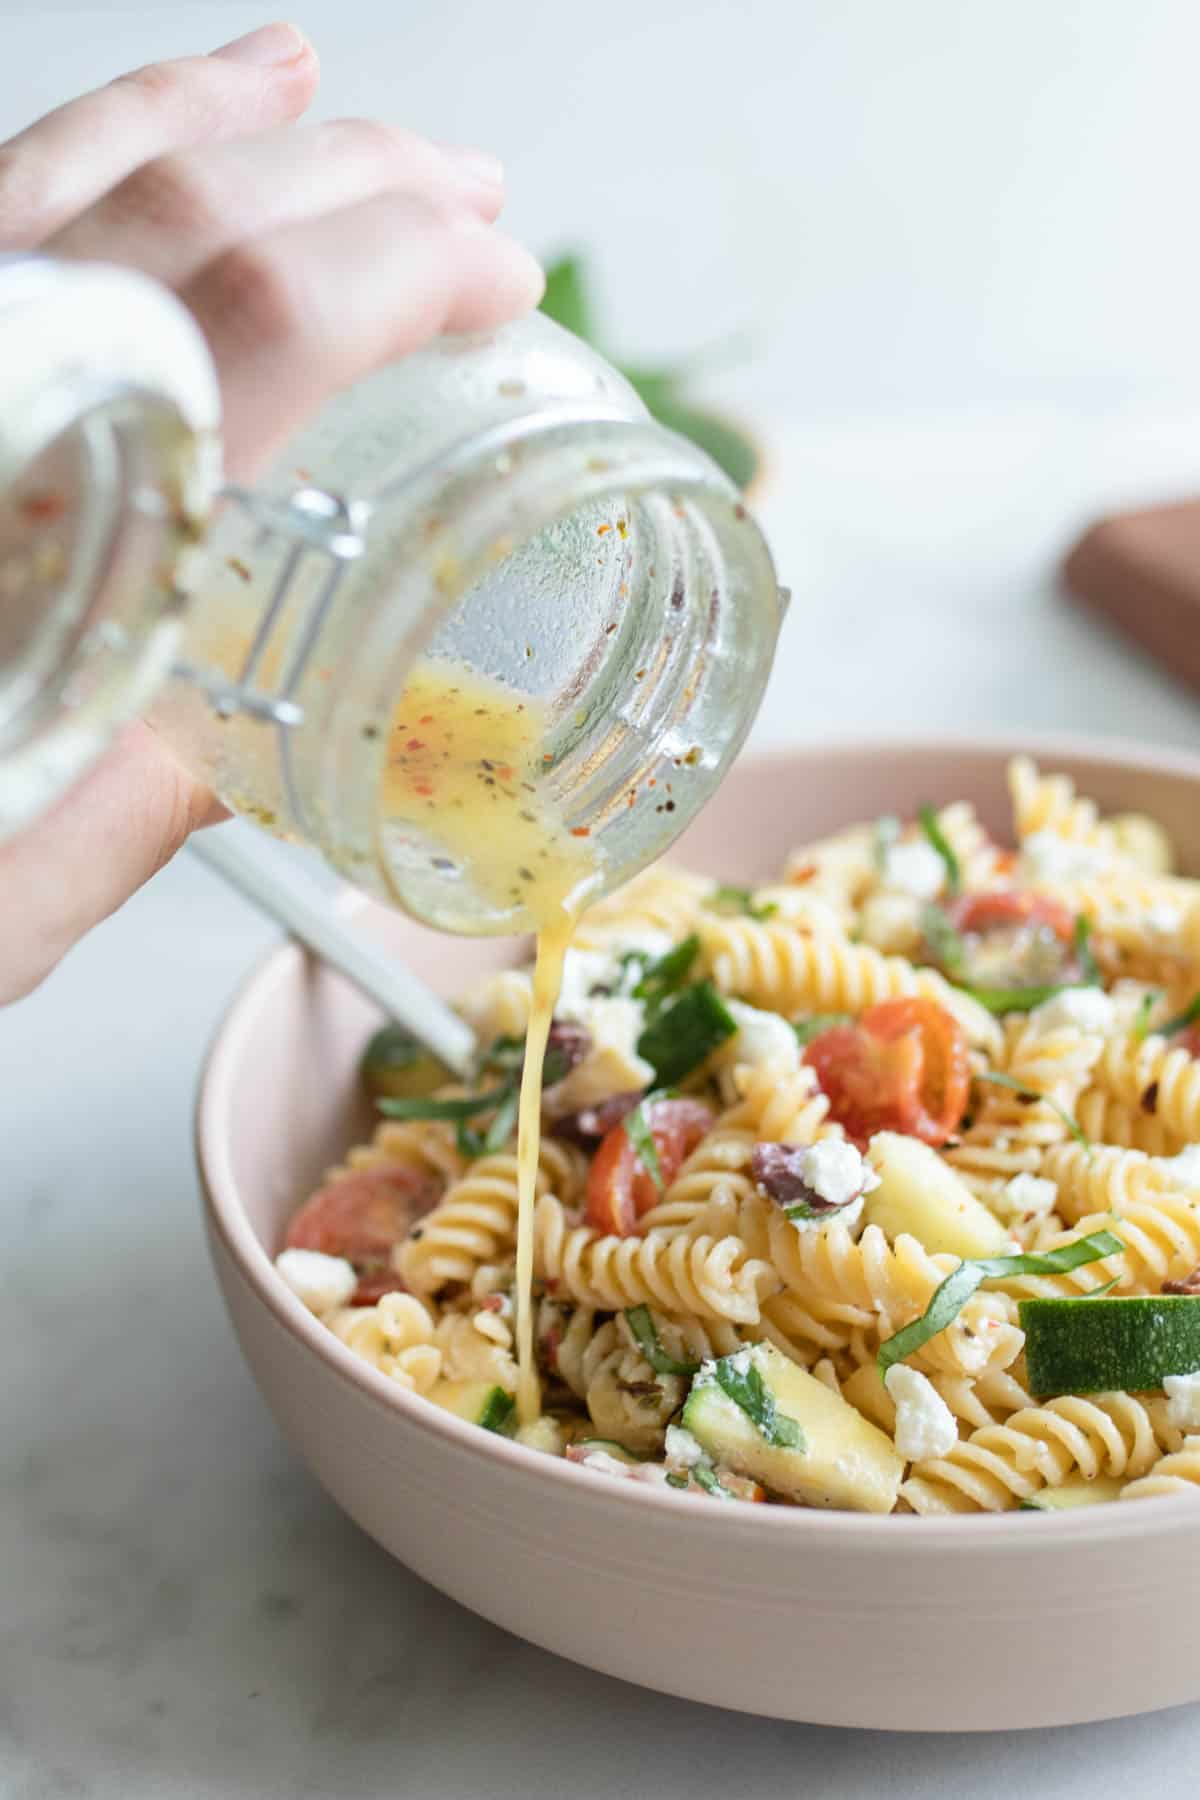 Pouring dressing onto a Mediterranean pasta salad.